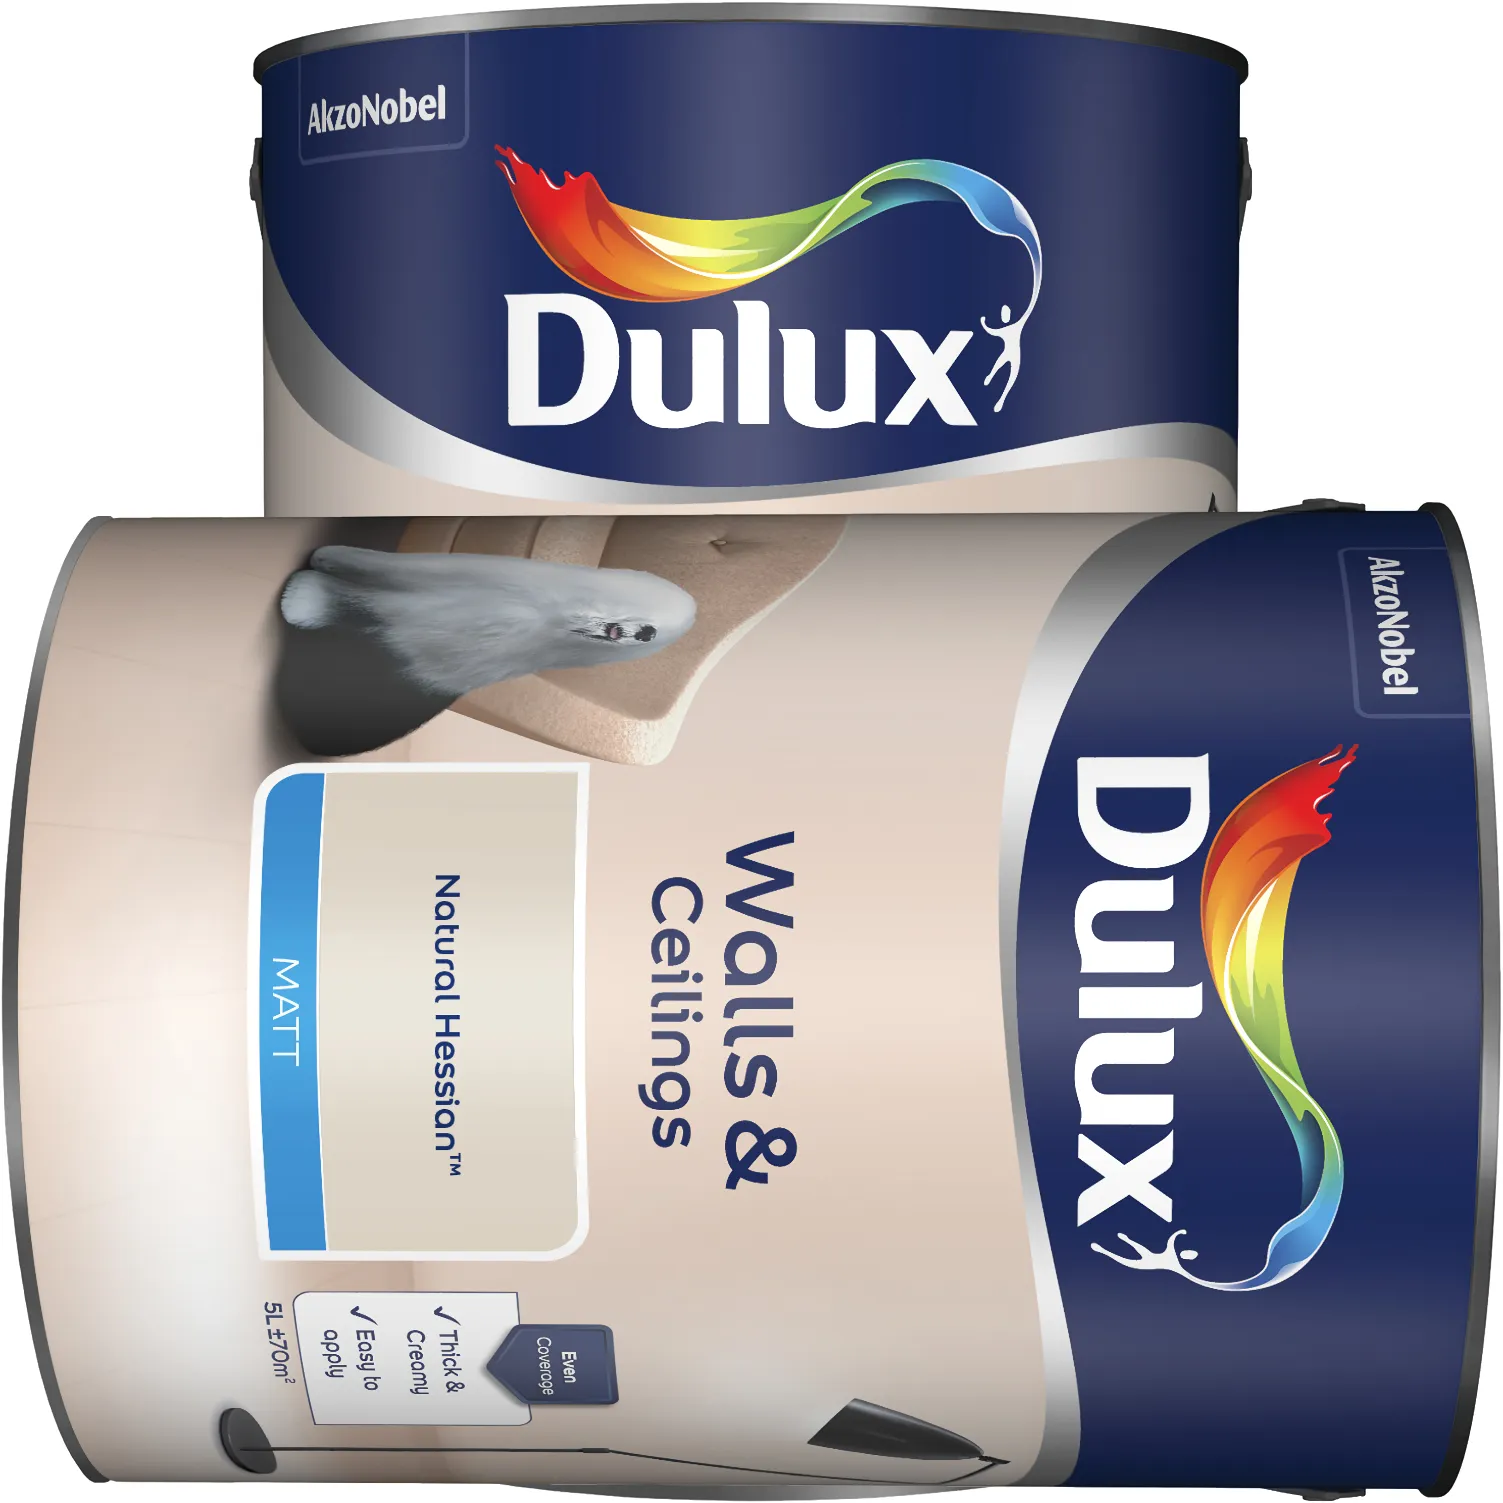 Free Dulux Premium Paint